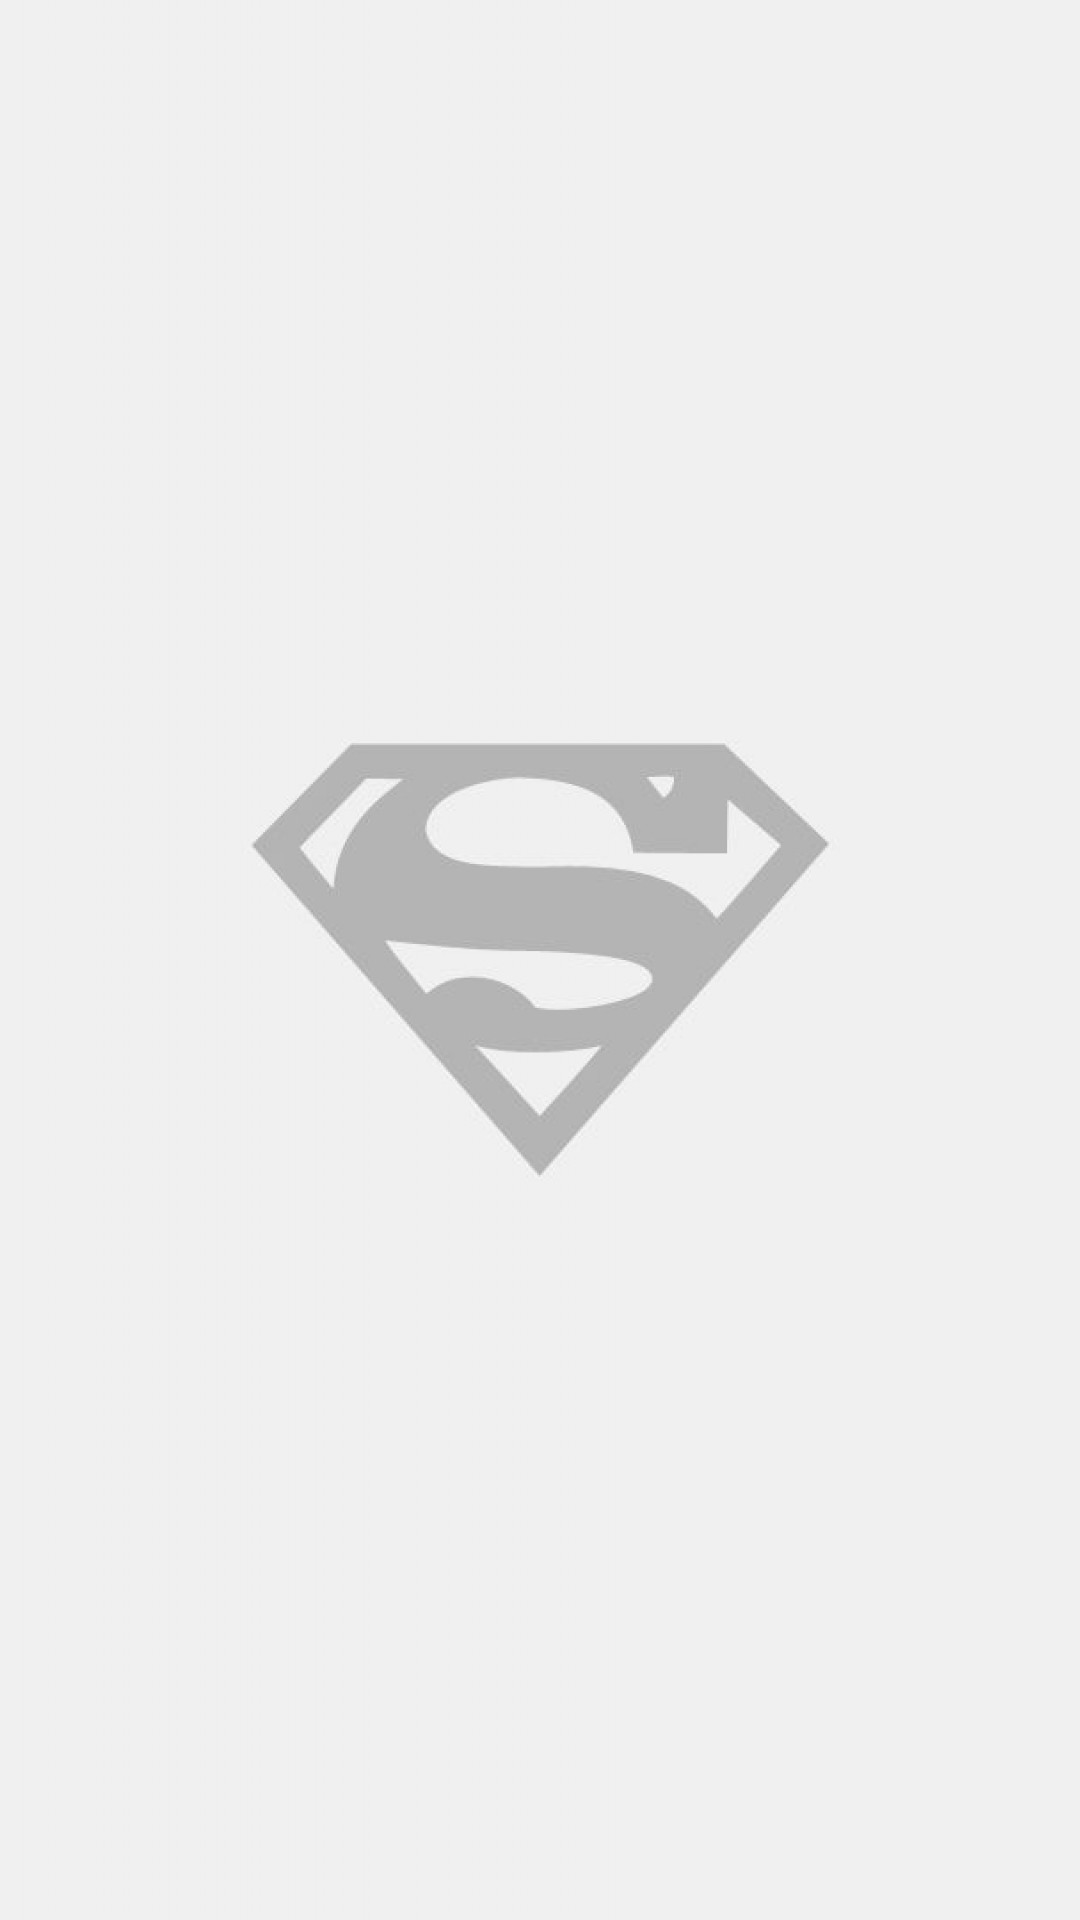 Superman Sticker HD Wallpaper iPhone 6 / 6S Plus - HD Wallpaper - Wallpapers .net